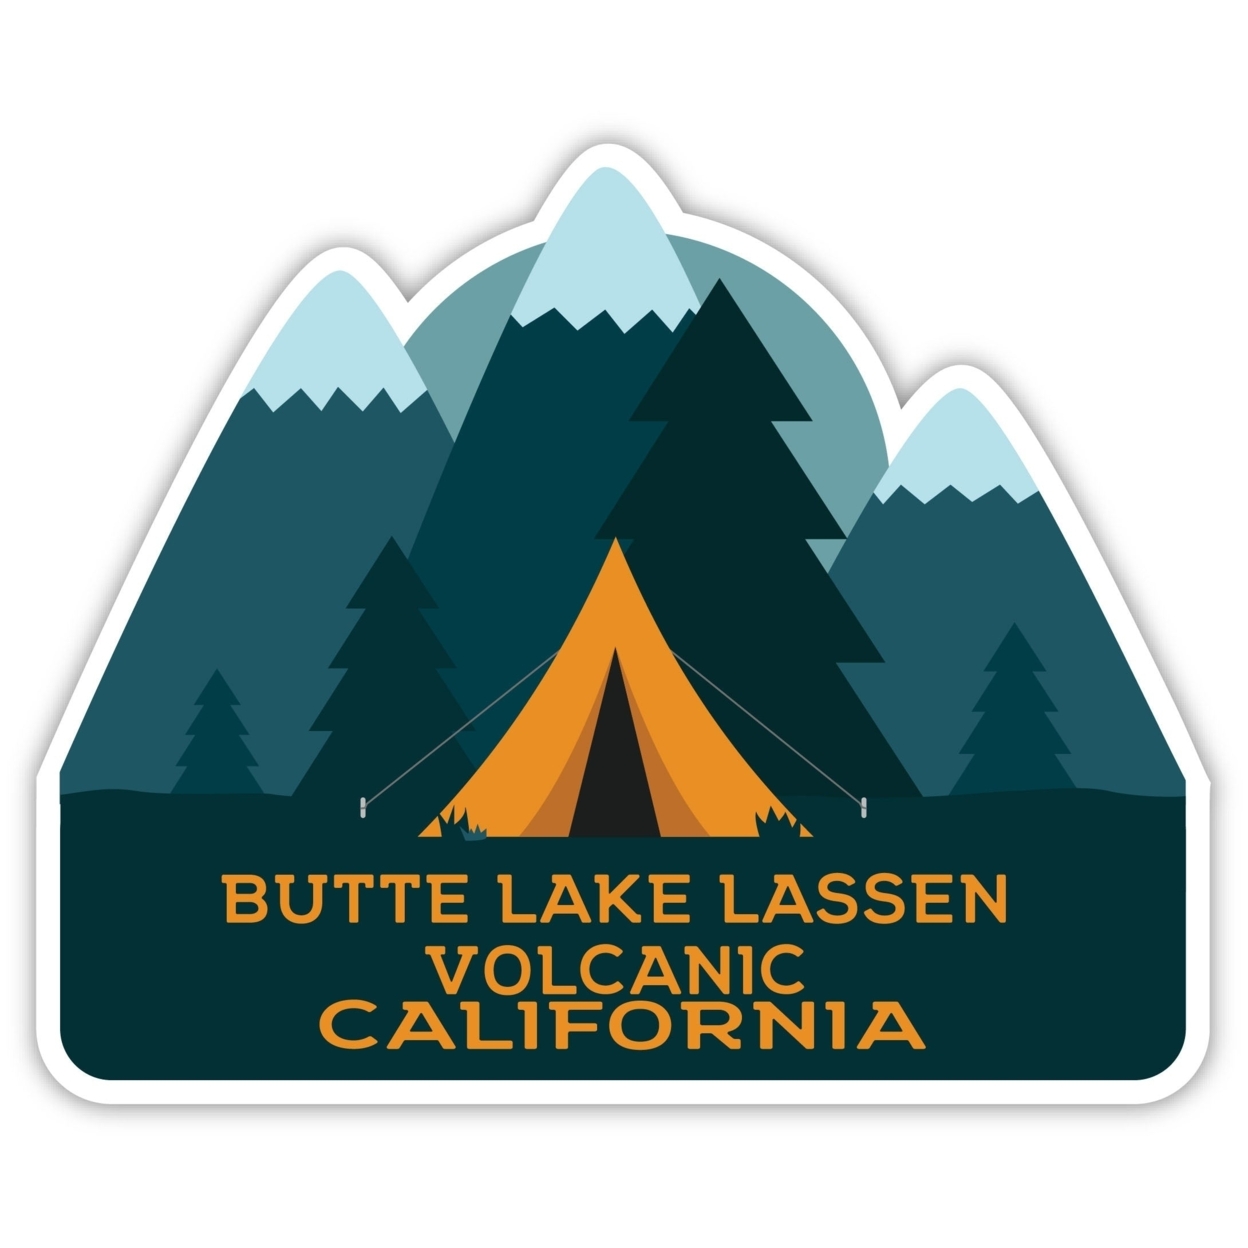 Butte Lake Lassen Volcanic California Souvenir Decorative Stickers (Choose Theme And Size) - Single Unit, 8-Inch, Tent